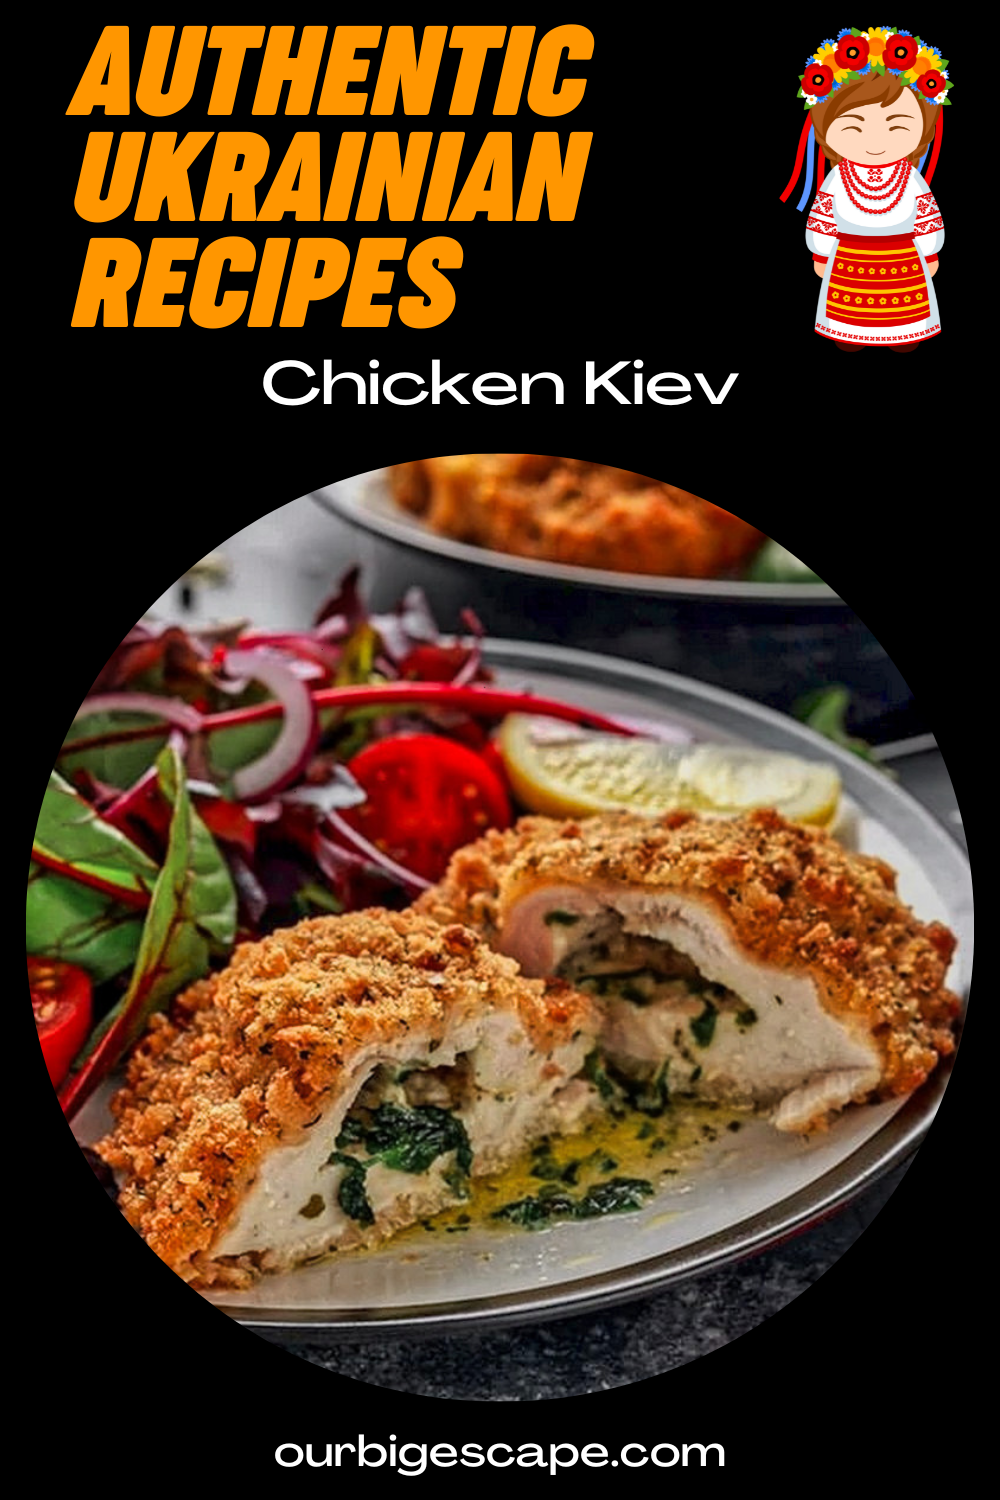 2. Ukrainian Chicken Kiev - Authentic Ukrainian Recipes